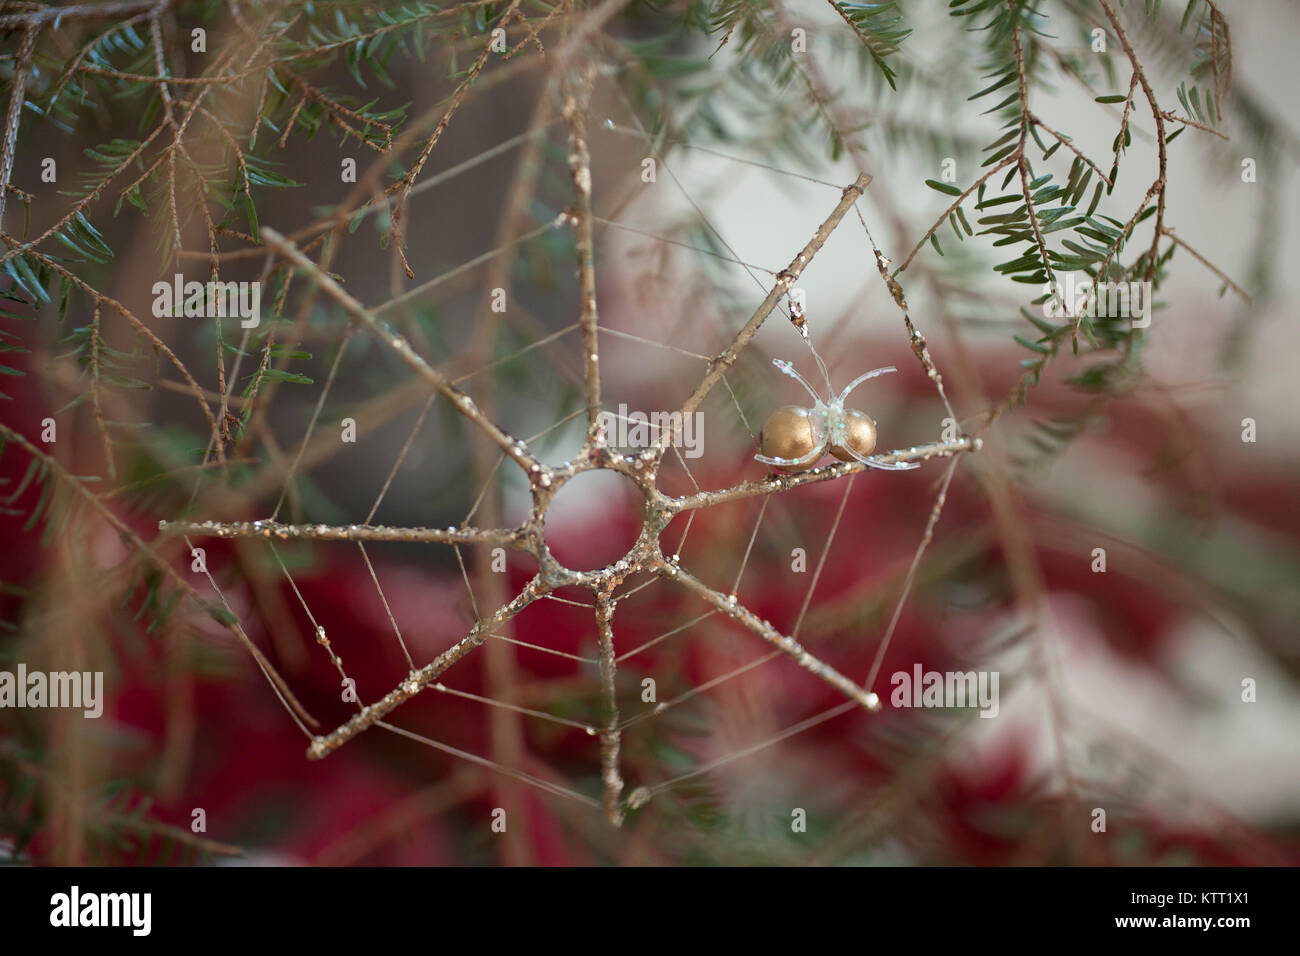 Ukrainian  spider and web traditional ornament on a Christmas tree based on Christmas story. Stock Photo